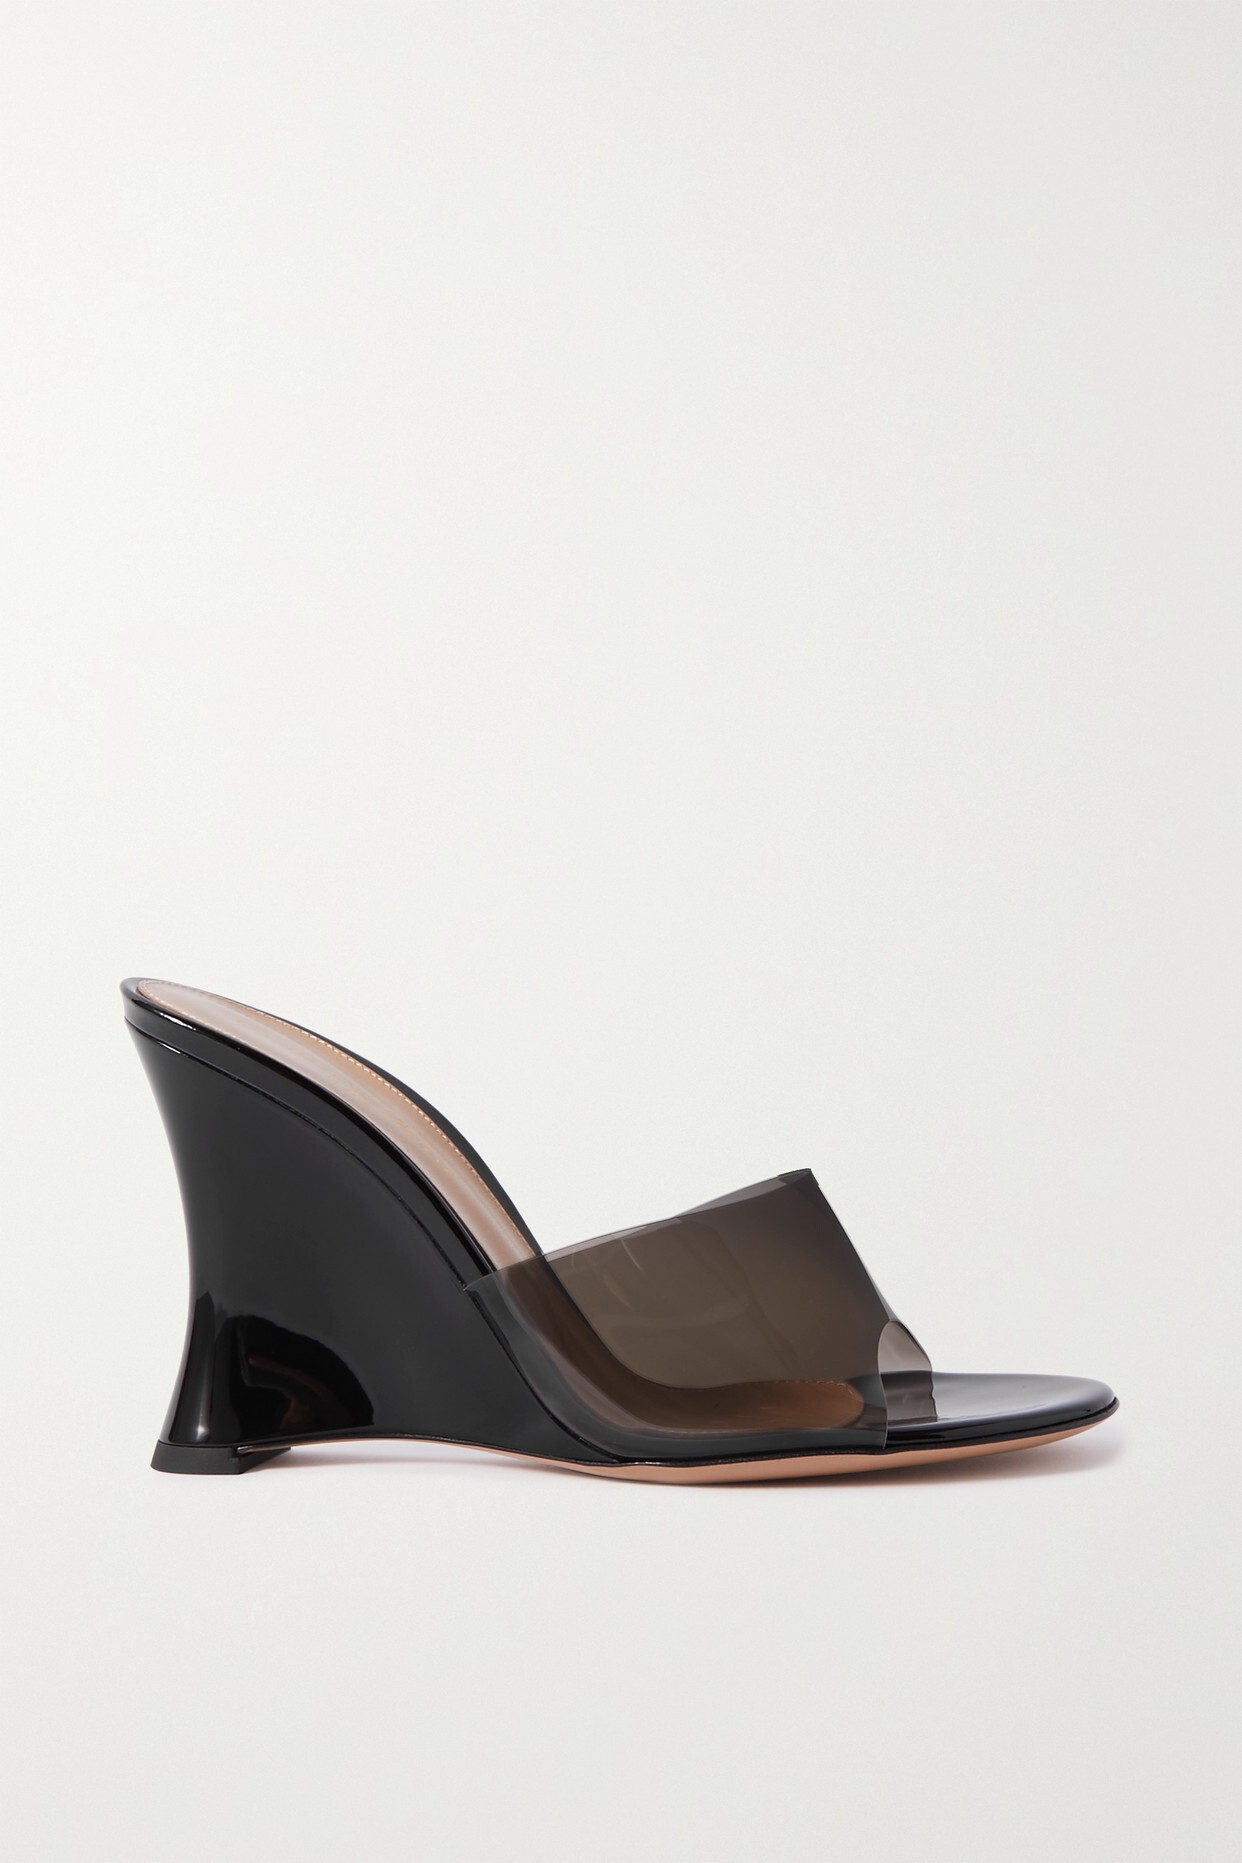 Gianvito Rossi - Futura 95 Patent-leather And Pvc Wedge Sandals - Black